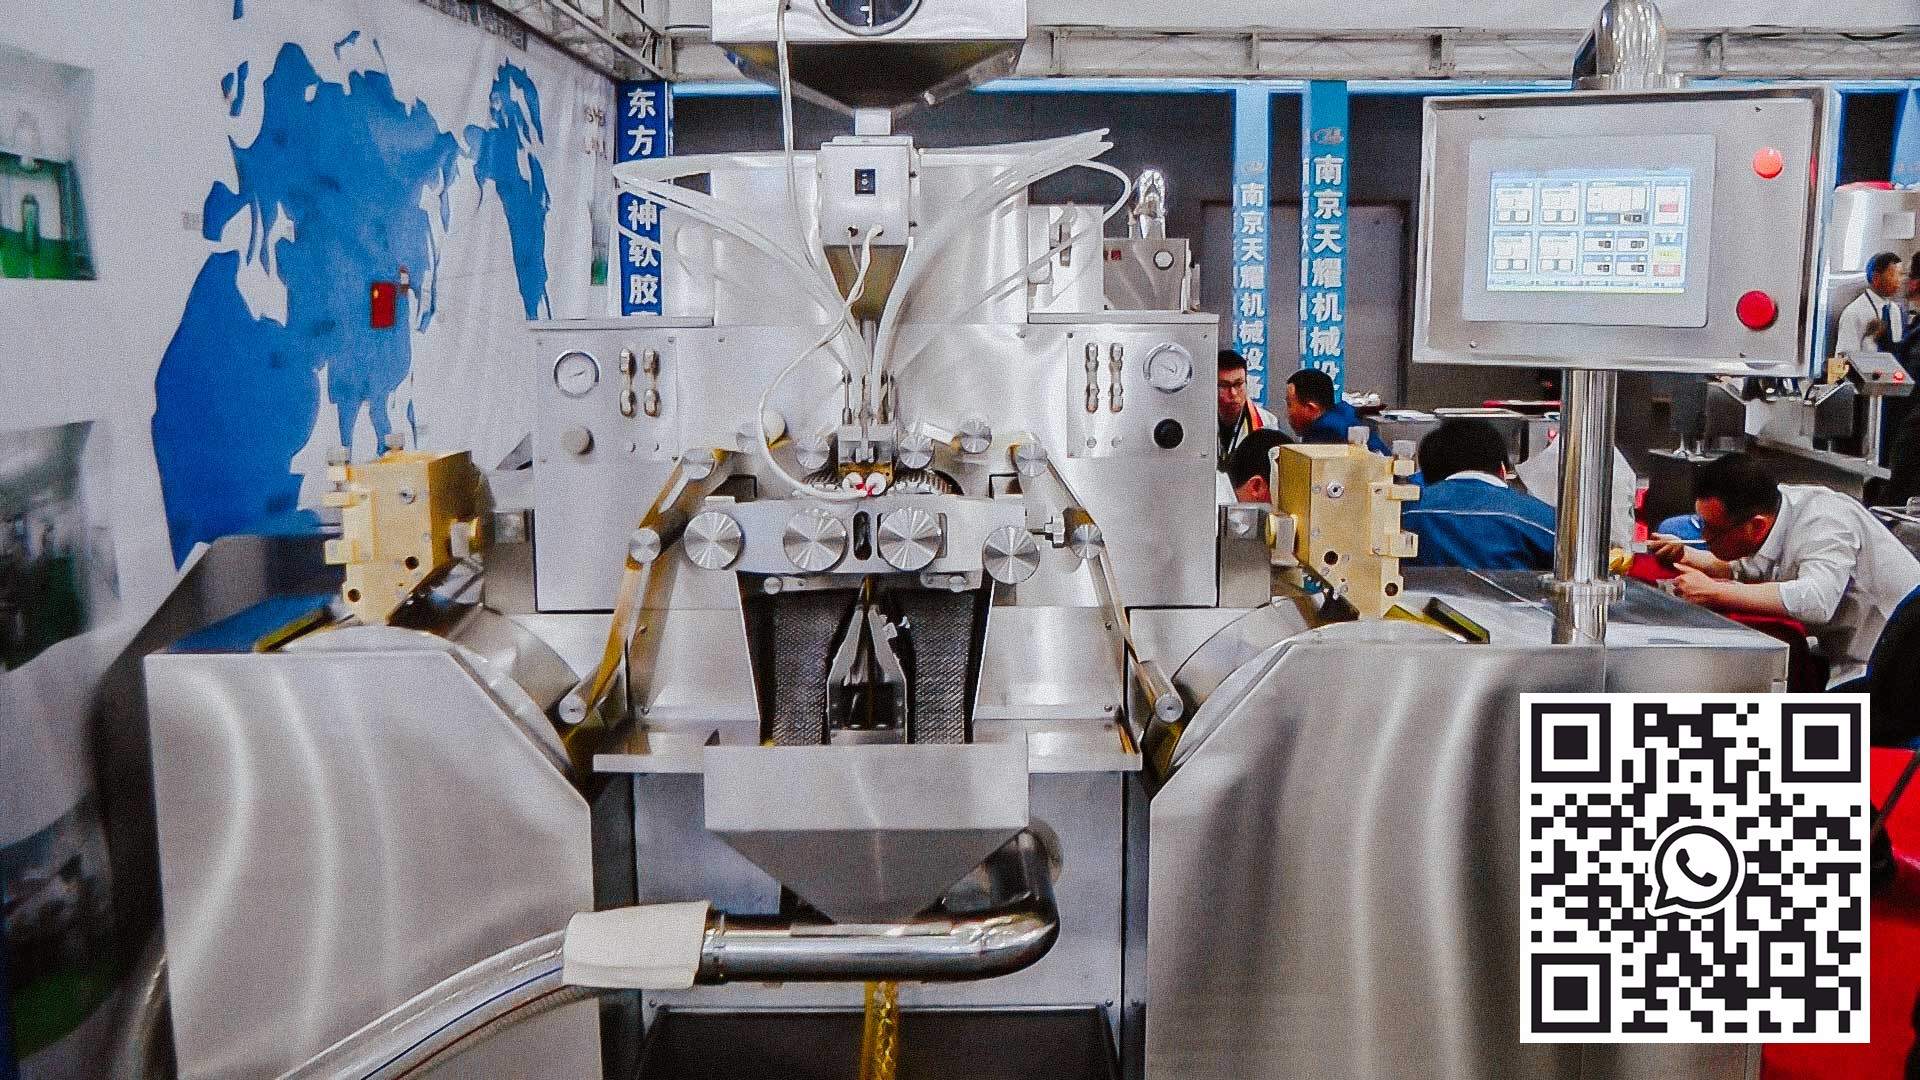 Encapsulation automatic machine to produce soft gel capsules for omega